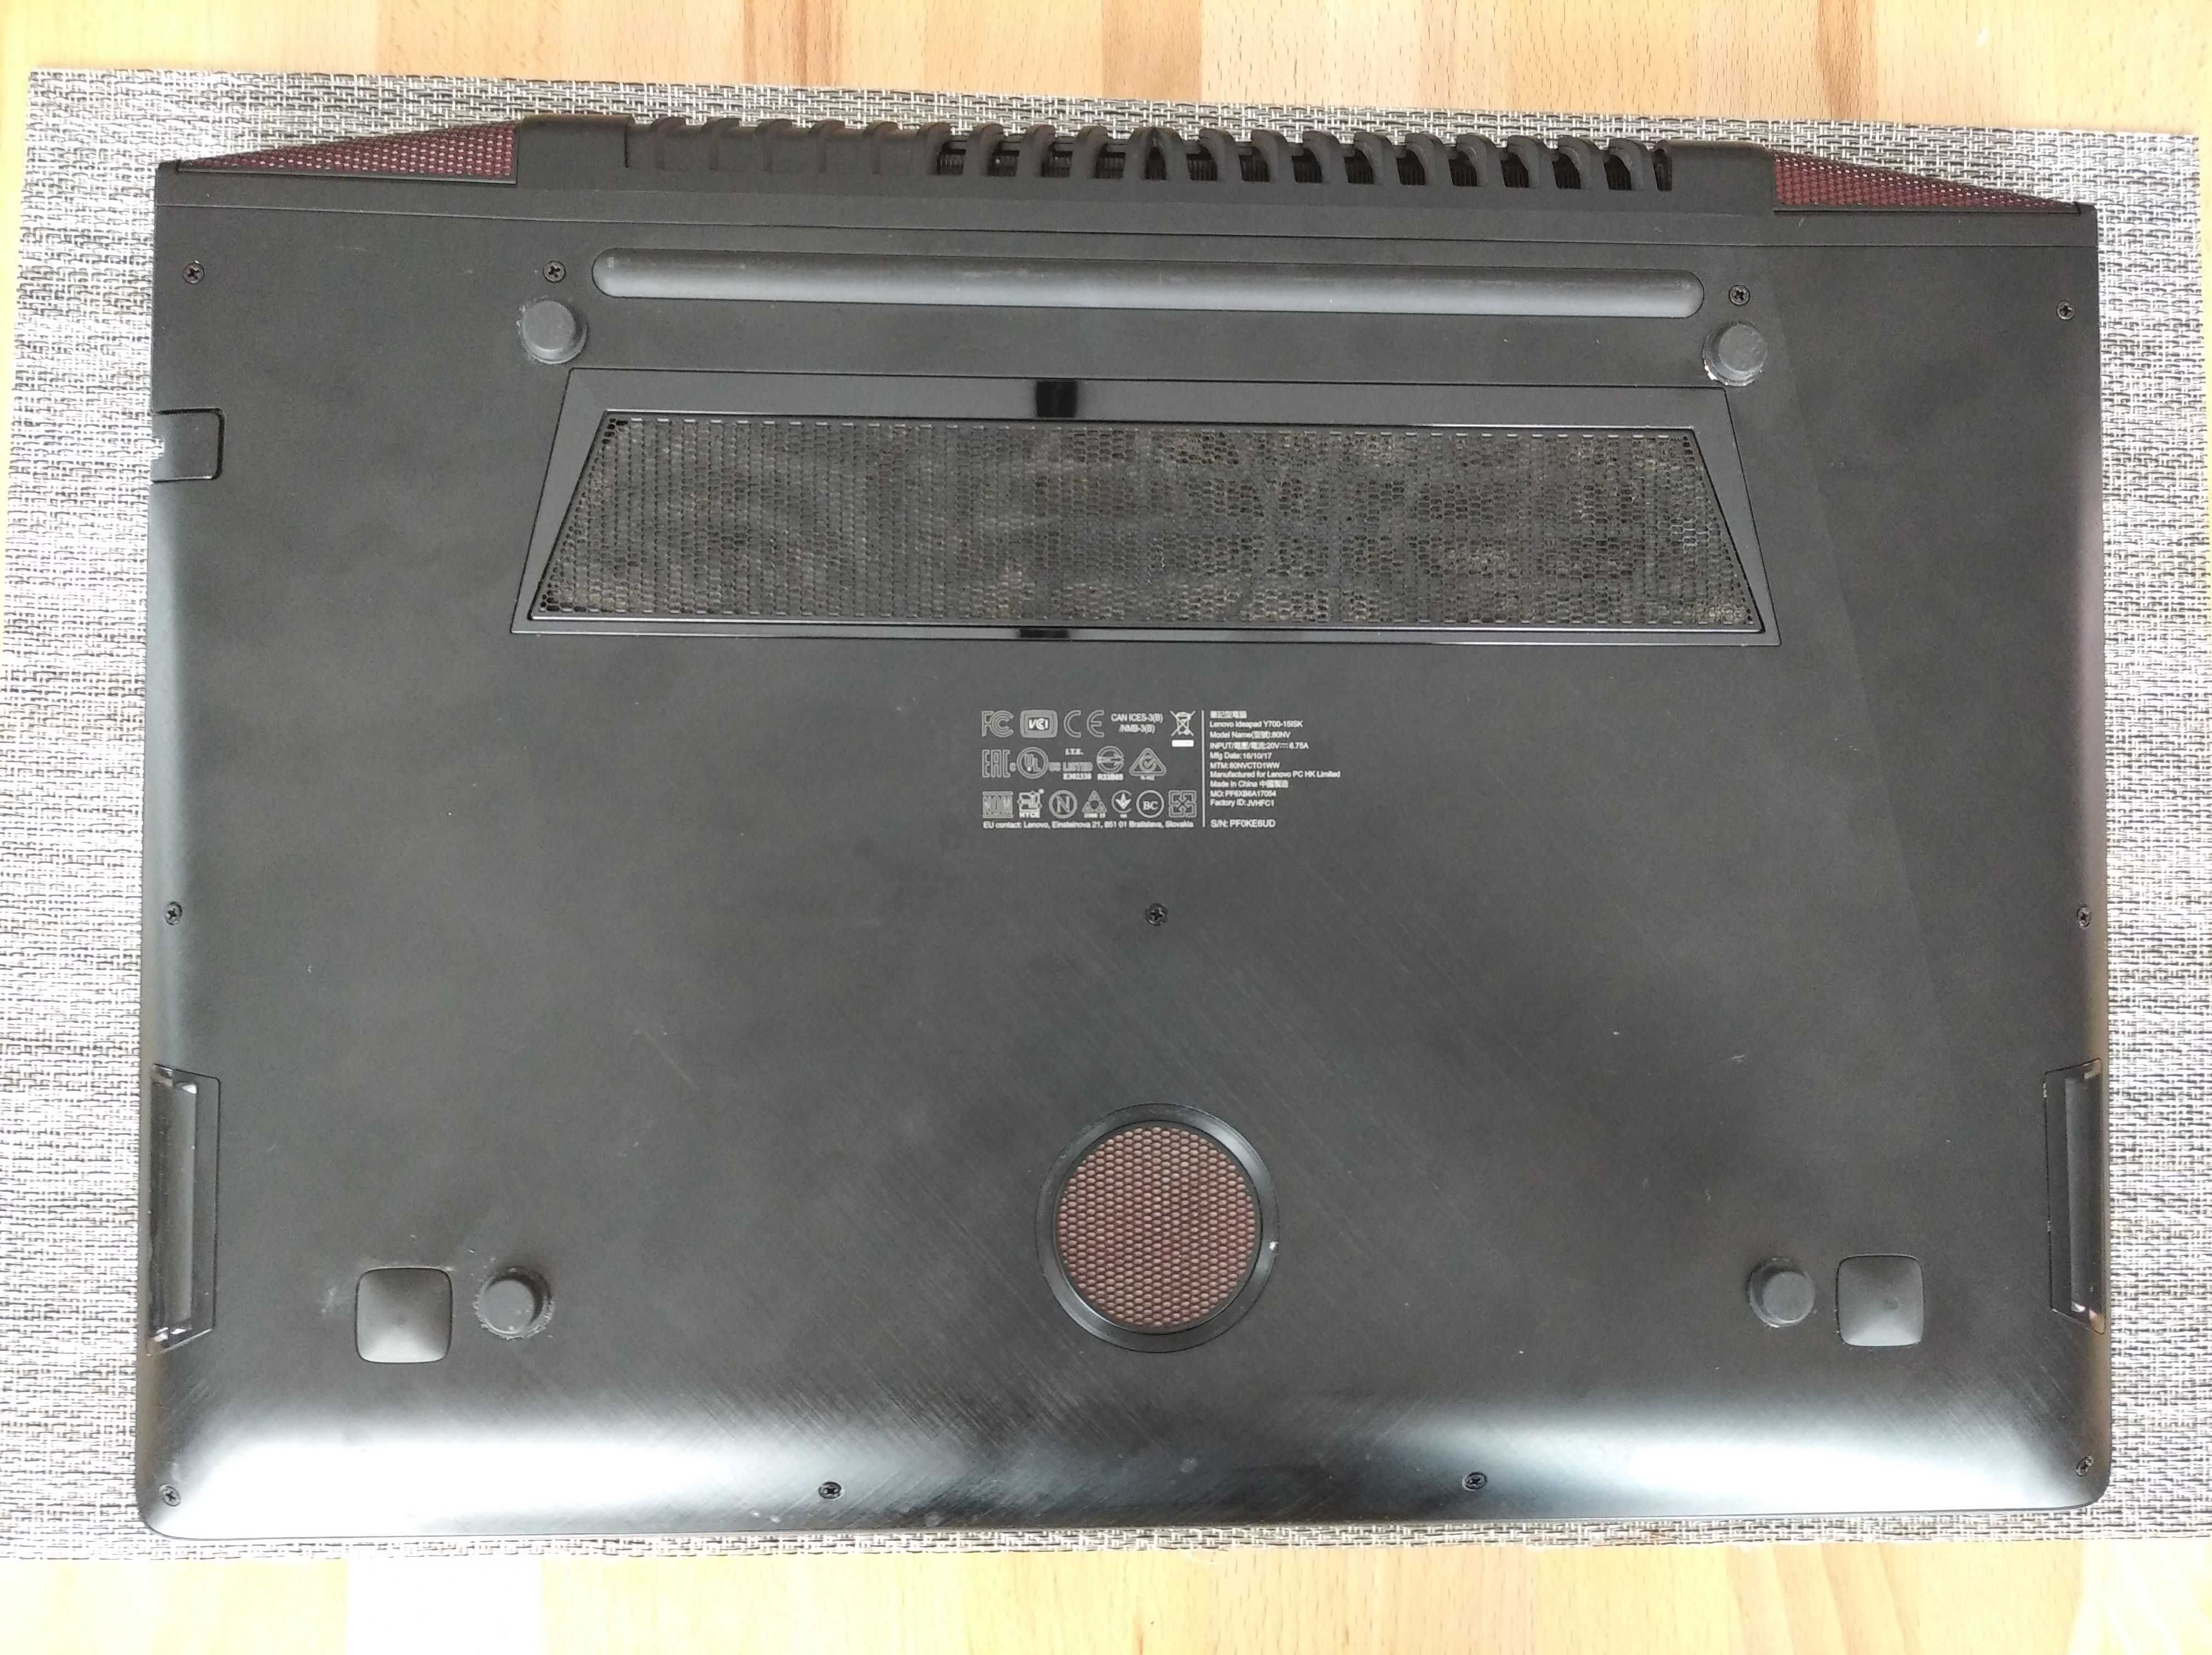 Laptop do gier Lenovo Y700-15ISK intel i7 Geforce 960M Forza Horizon 5